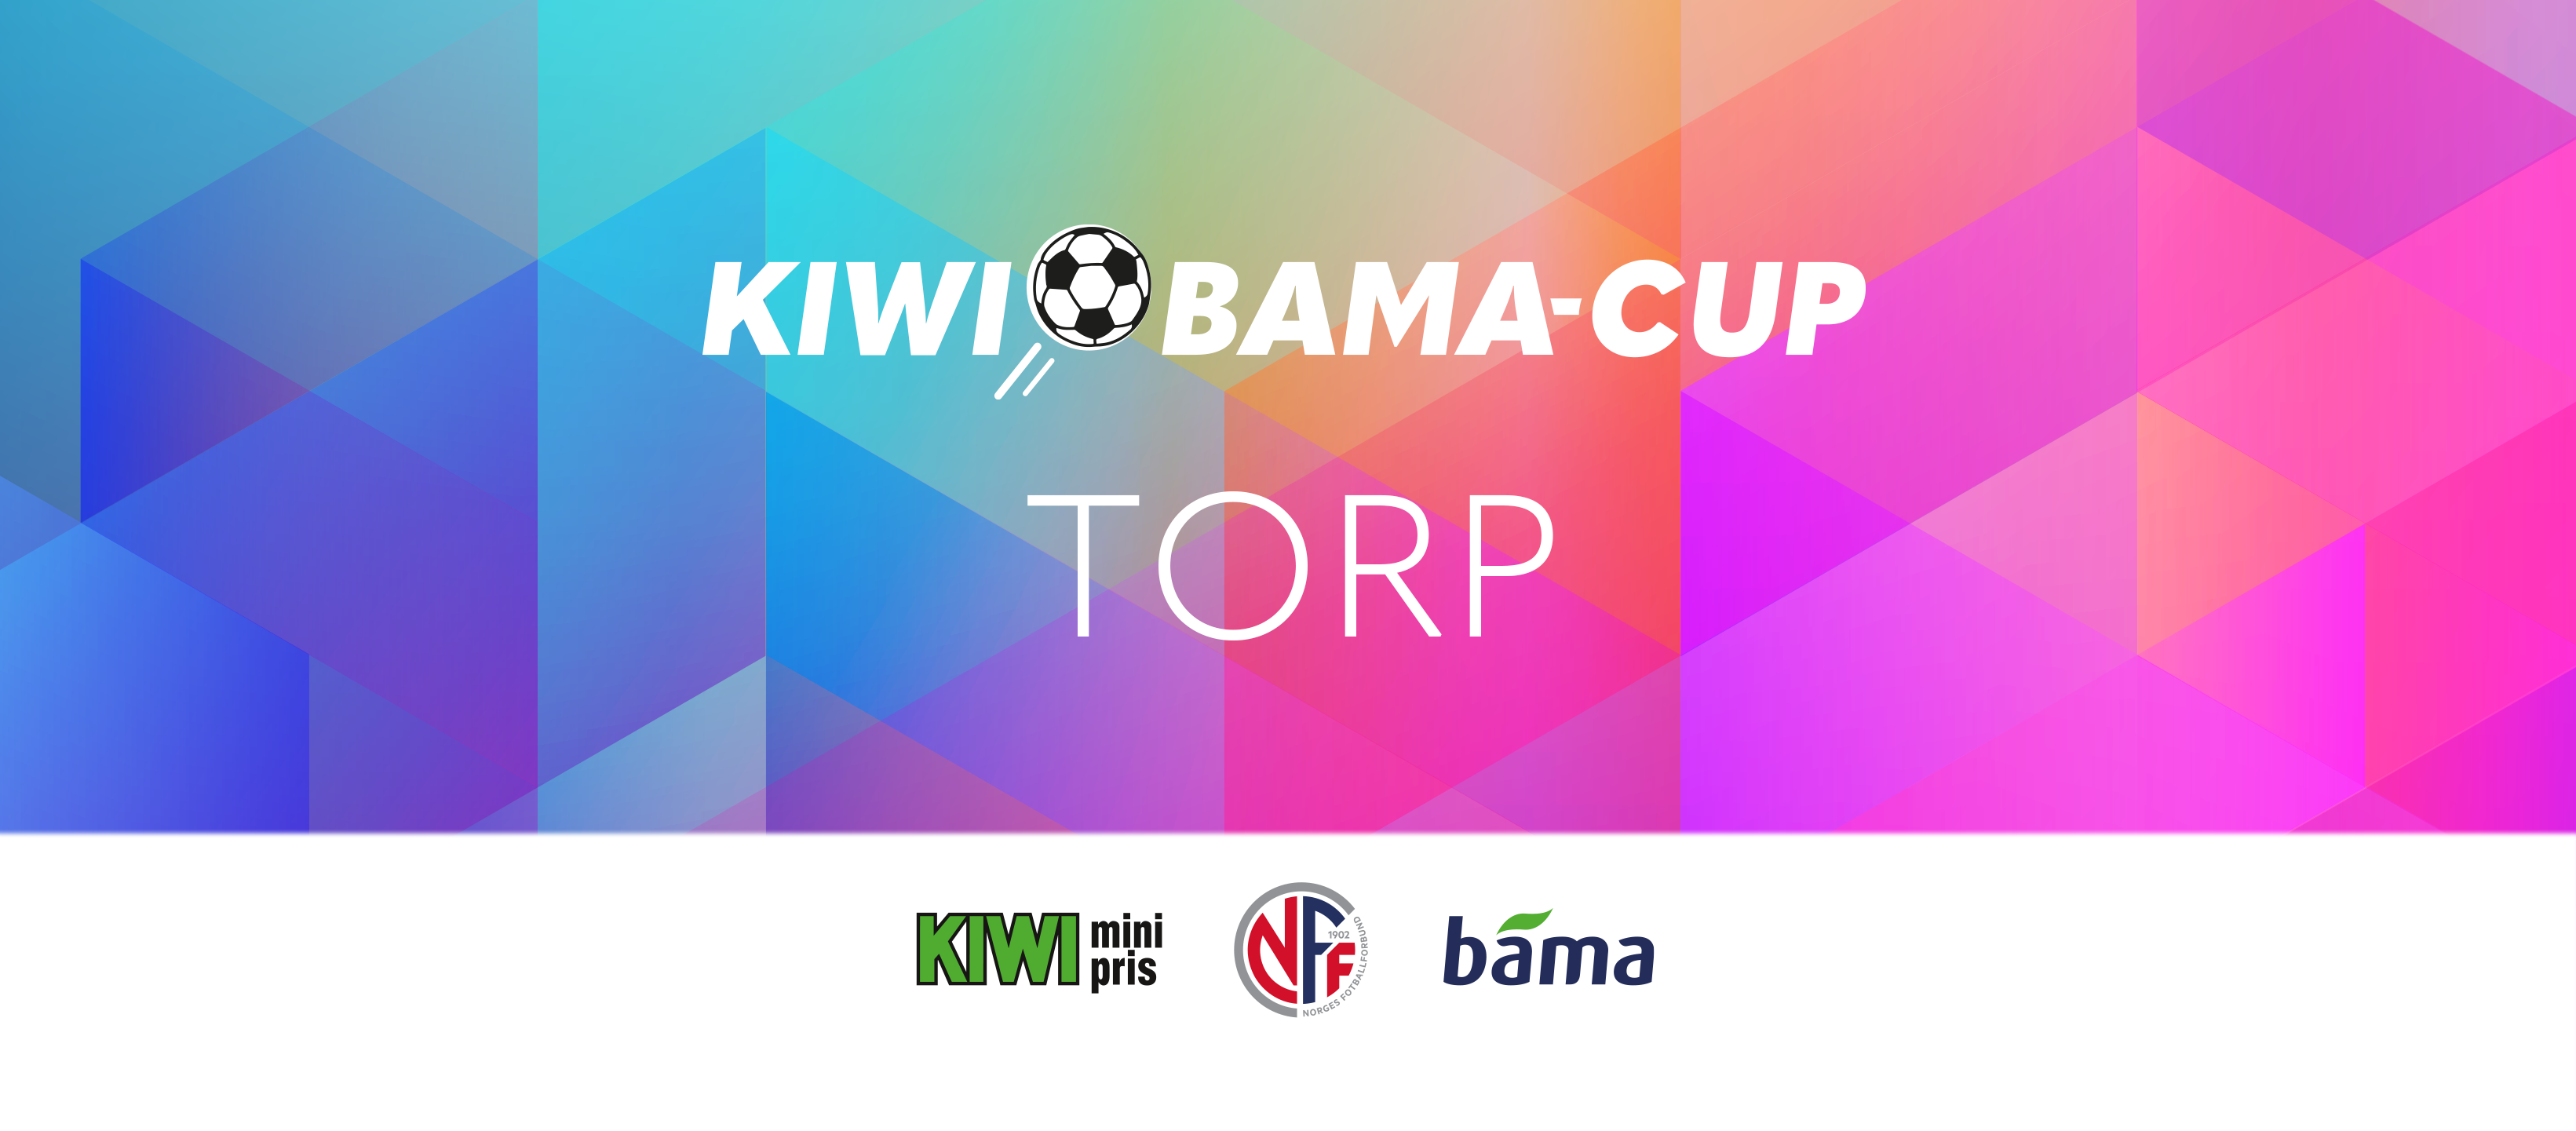 FB-BANNER KIWI-BAMA-Cup - Torp.png